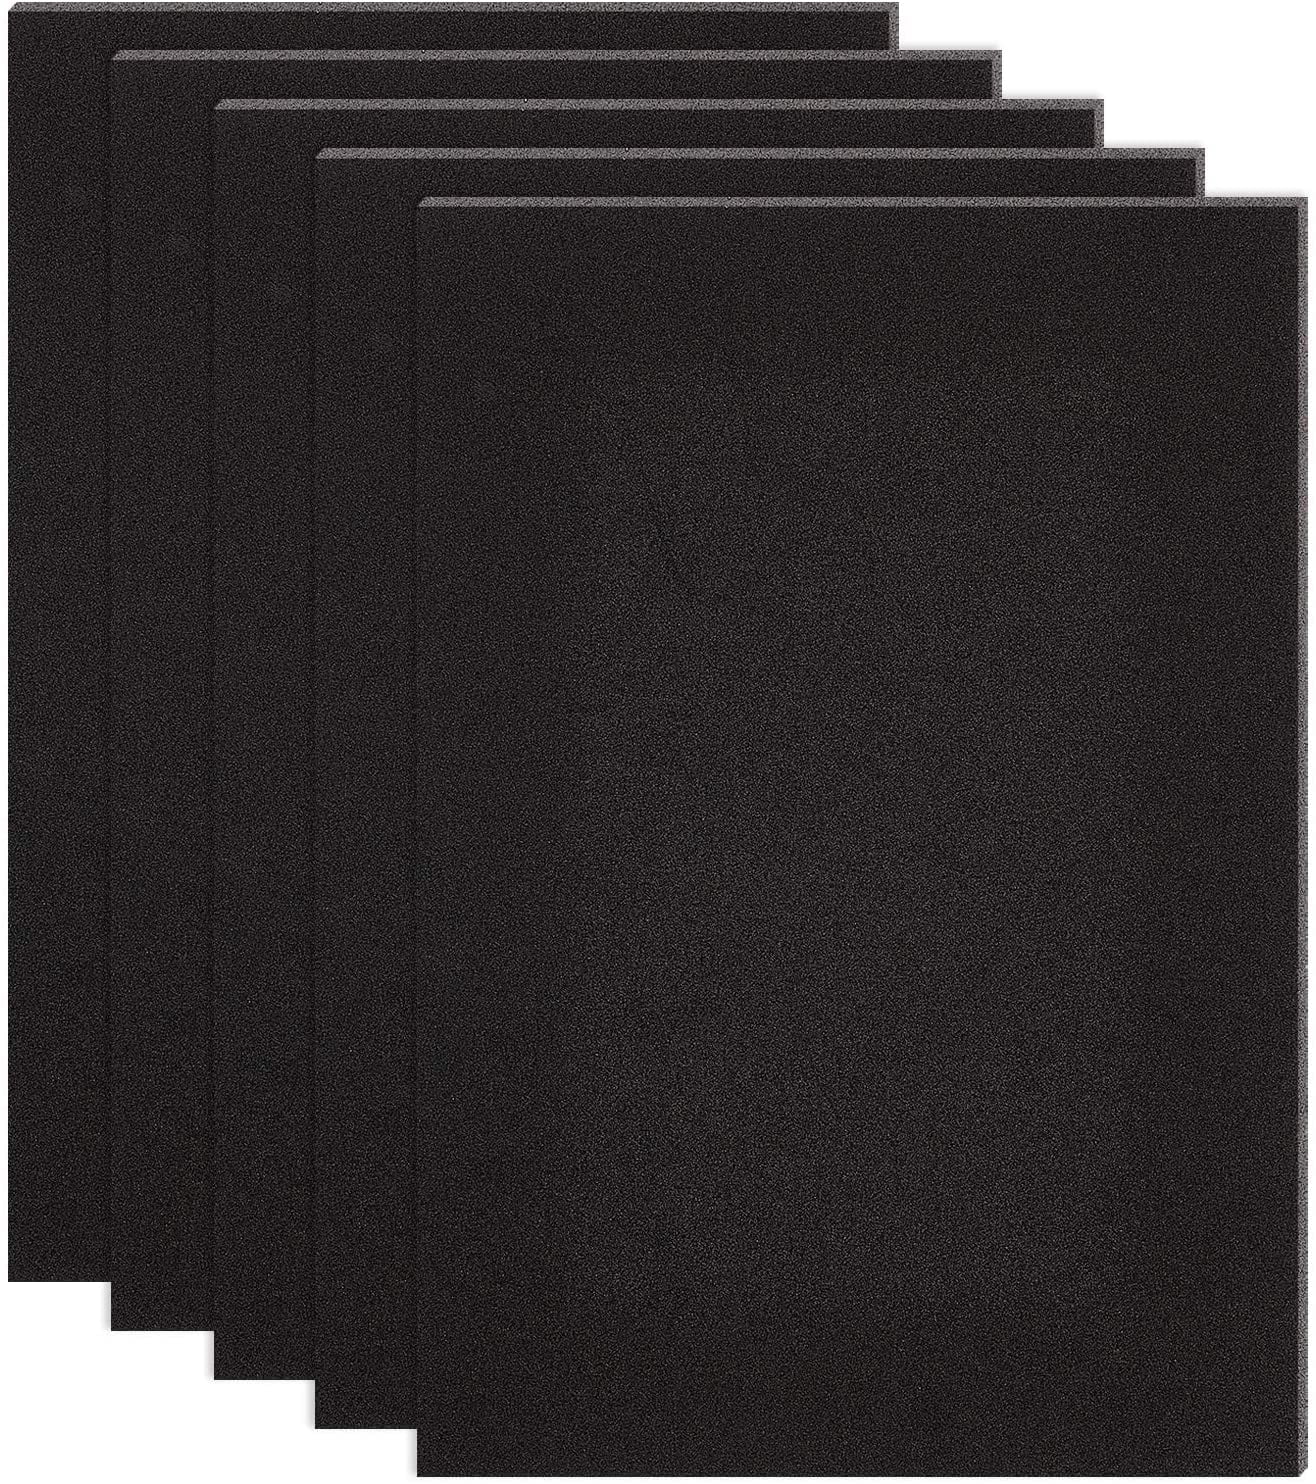 BENCO Sheet,Black,12x24 - Self-Adhesive Felt Sheets - 12 x 24 - Black